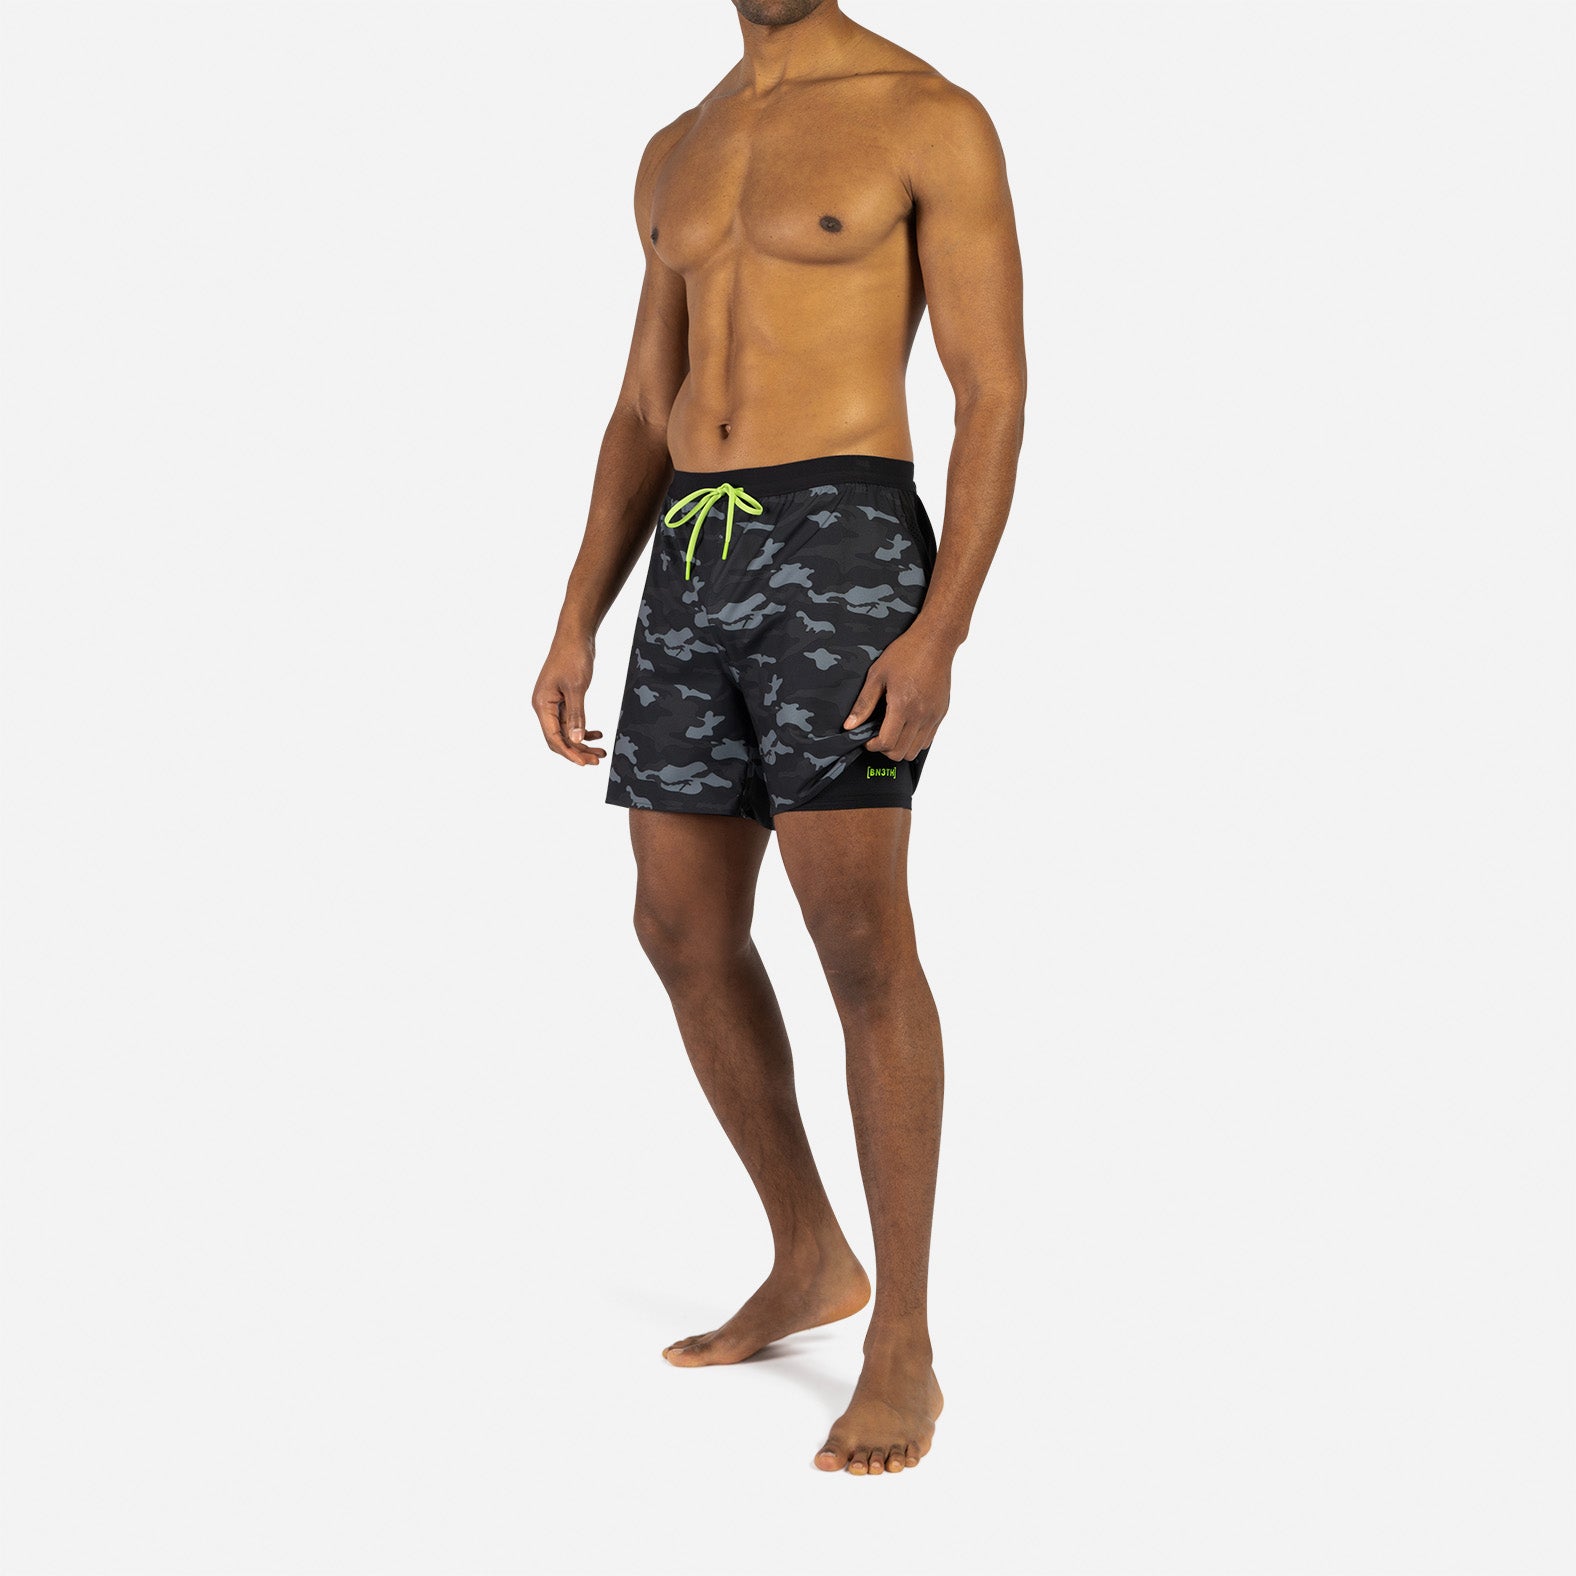 Runner's High 2N1 Short: Covert Camo | BN3TH Underwear – BN3TH.com